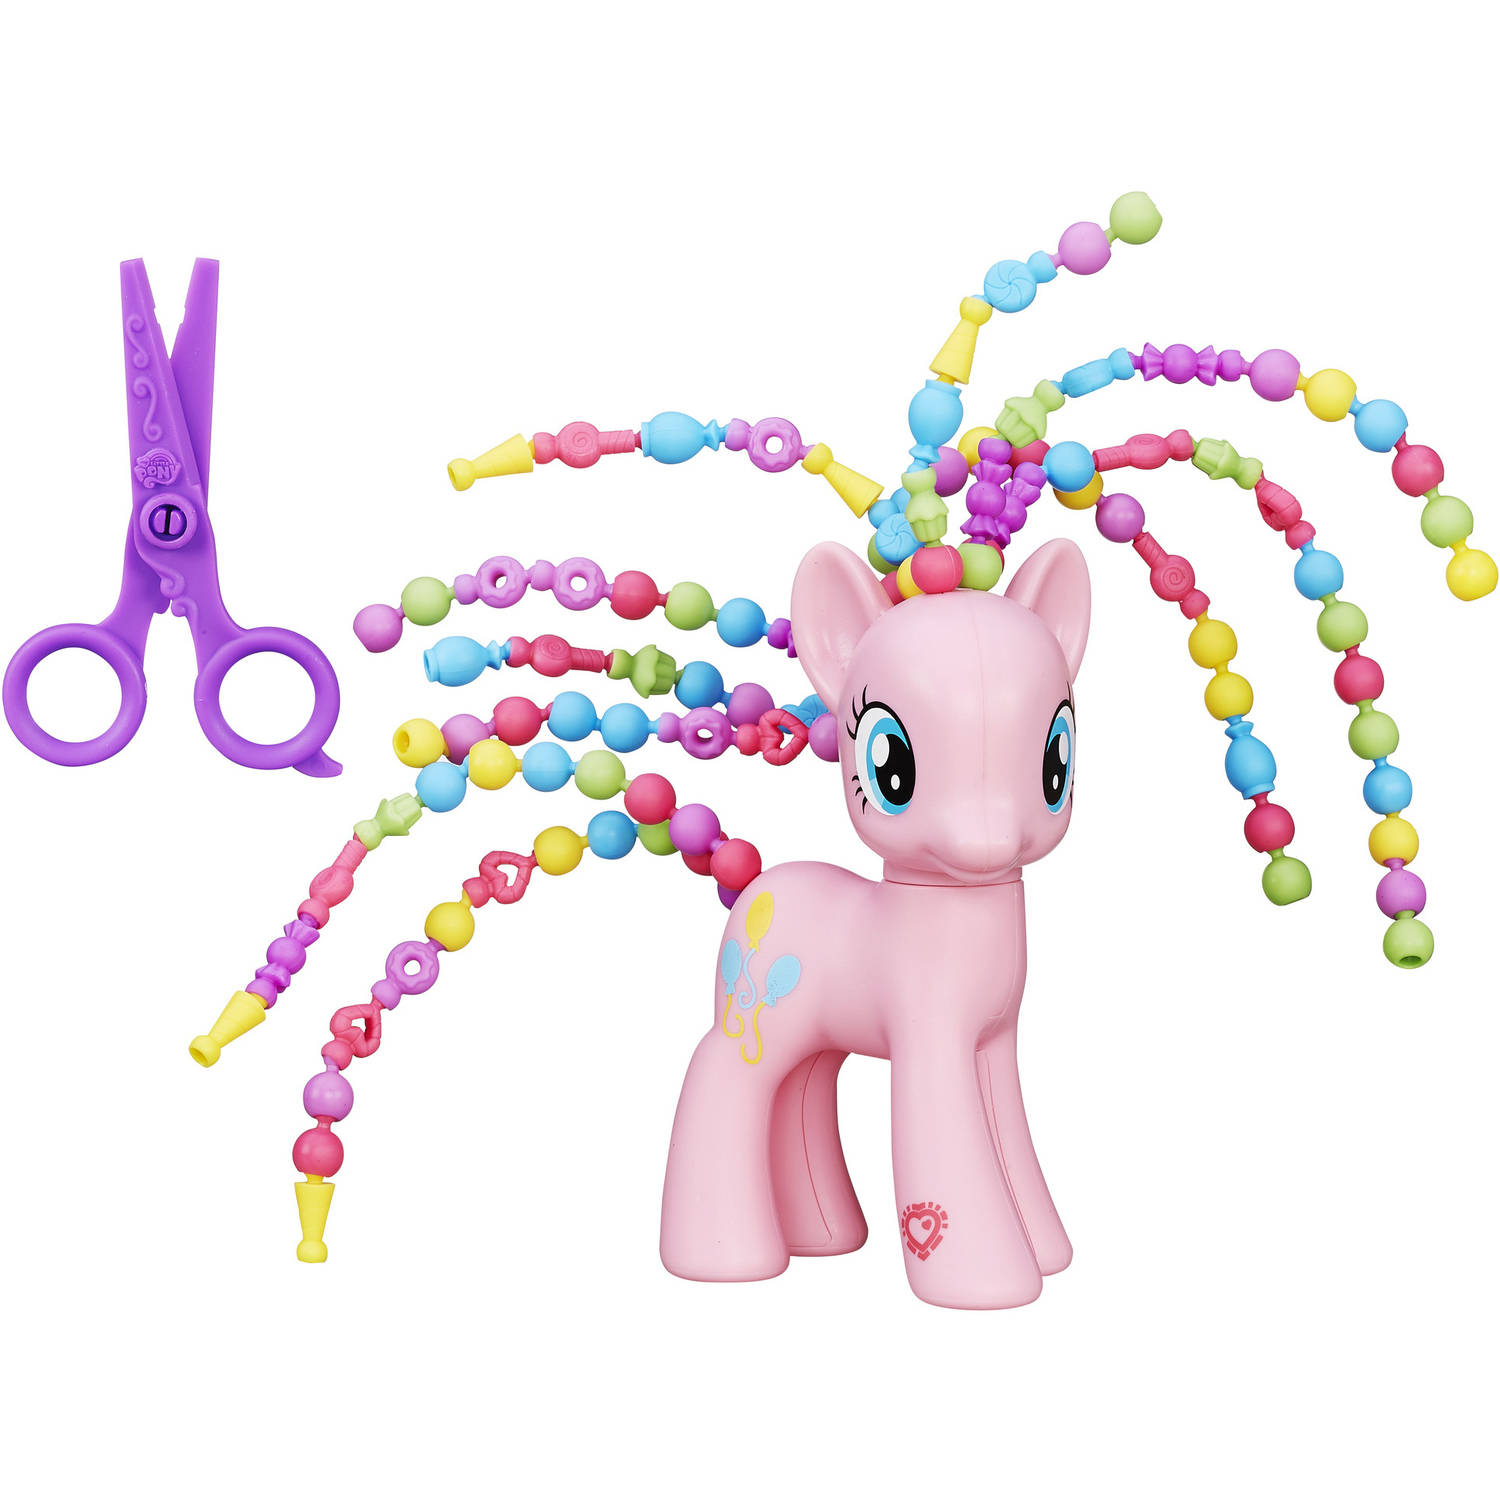 My Little Pony Friendship is Magic Cutie Twisty-Do Pinkie Pie Figure - image 1 of 6